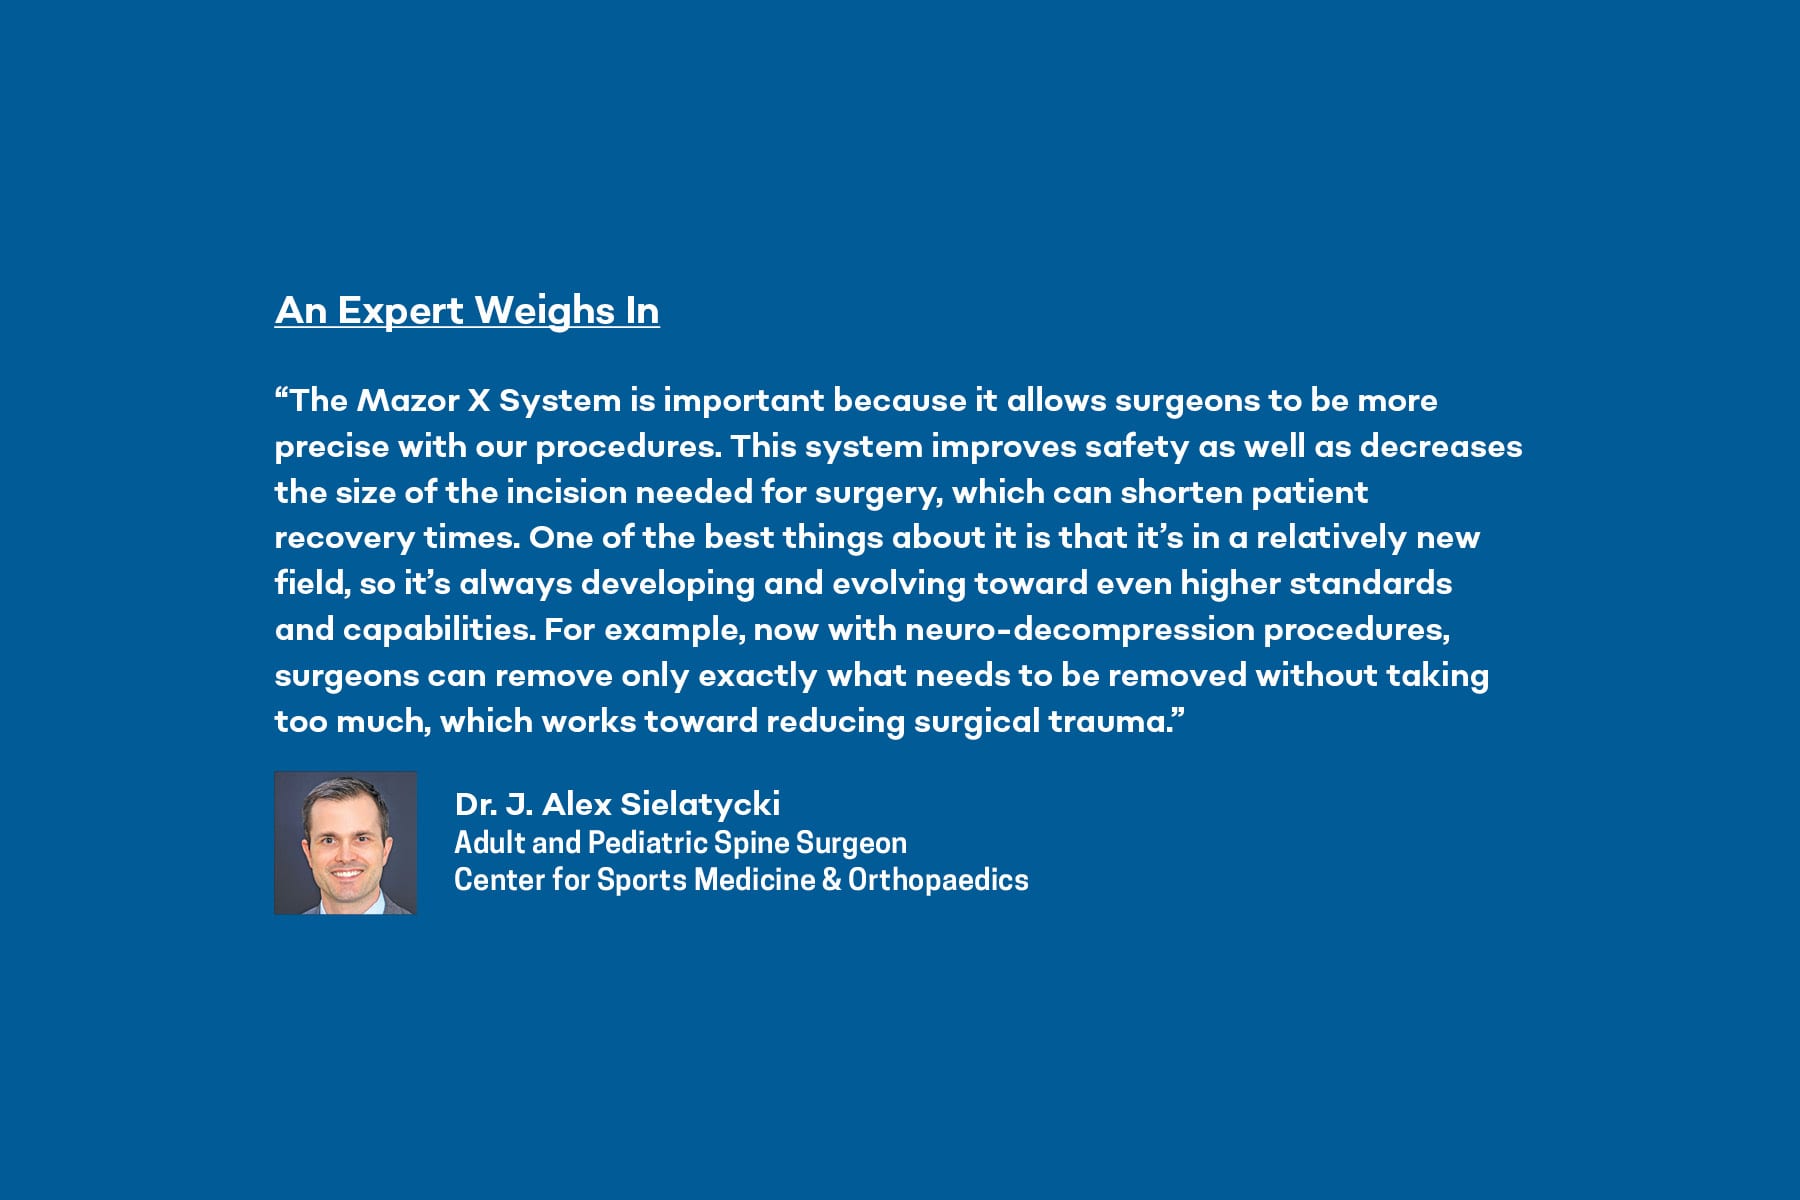 Dr. J. Alex Sielatycki shares his professional opinion on the Mazor X System